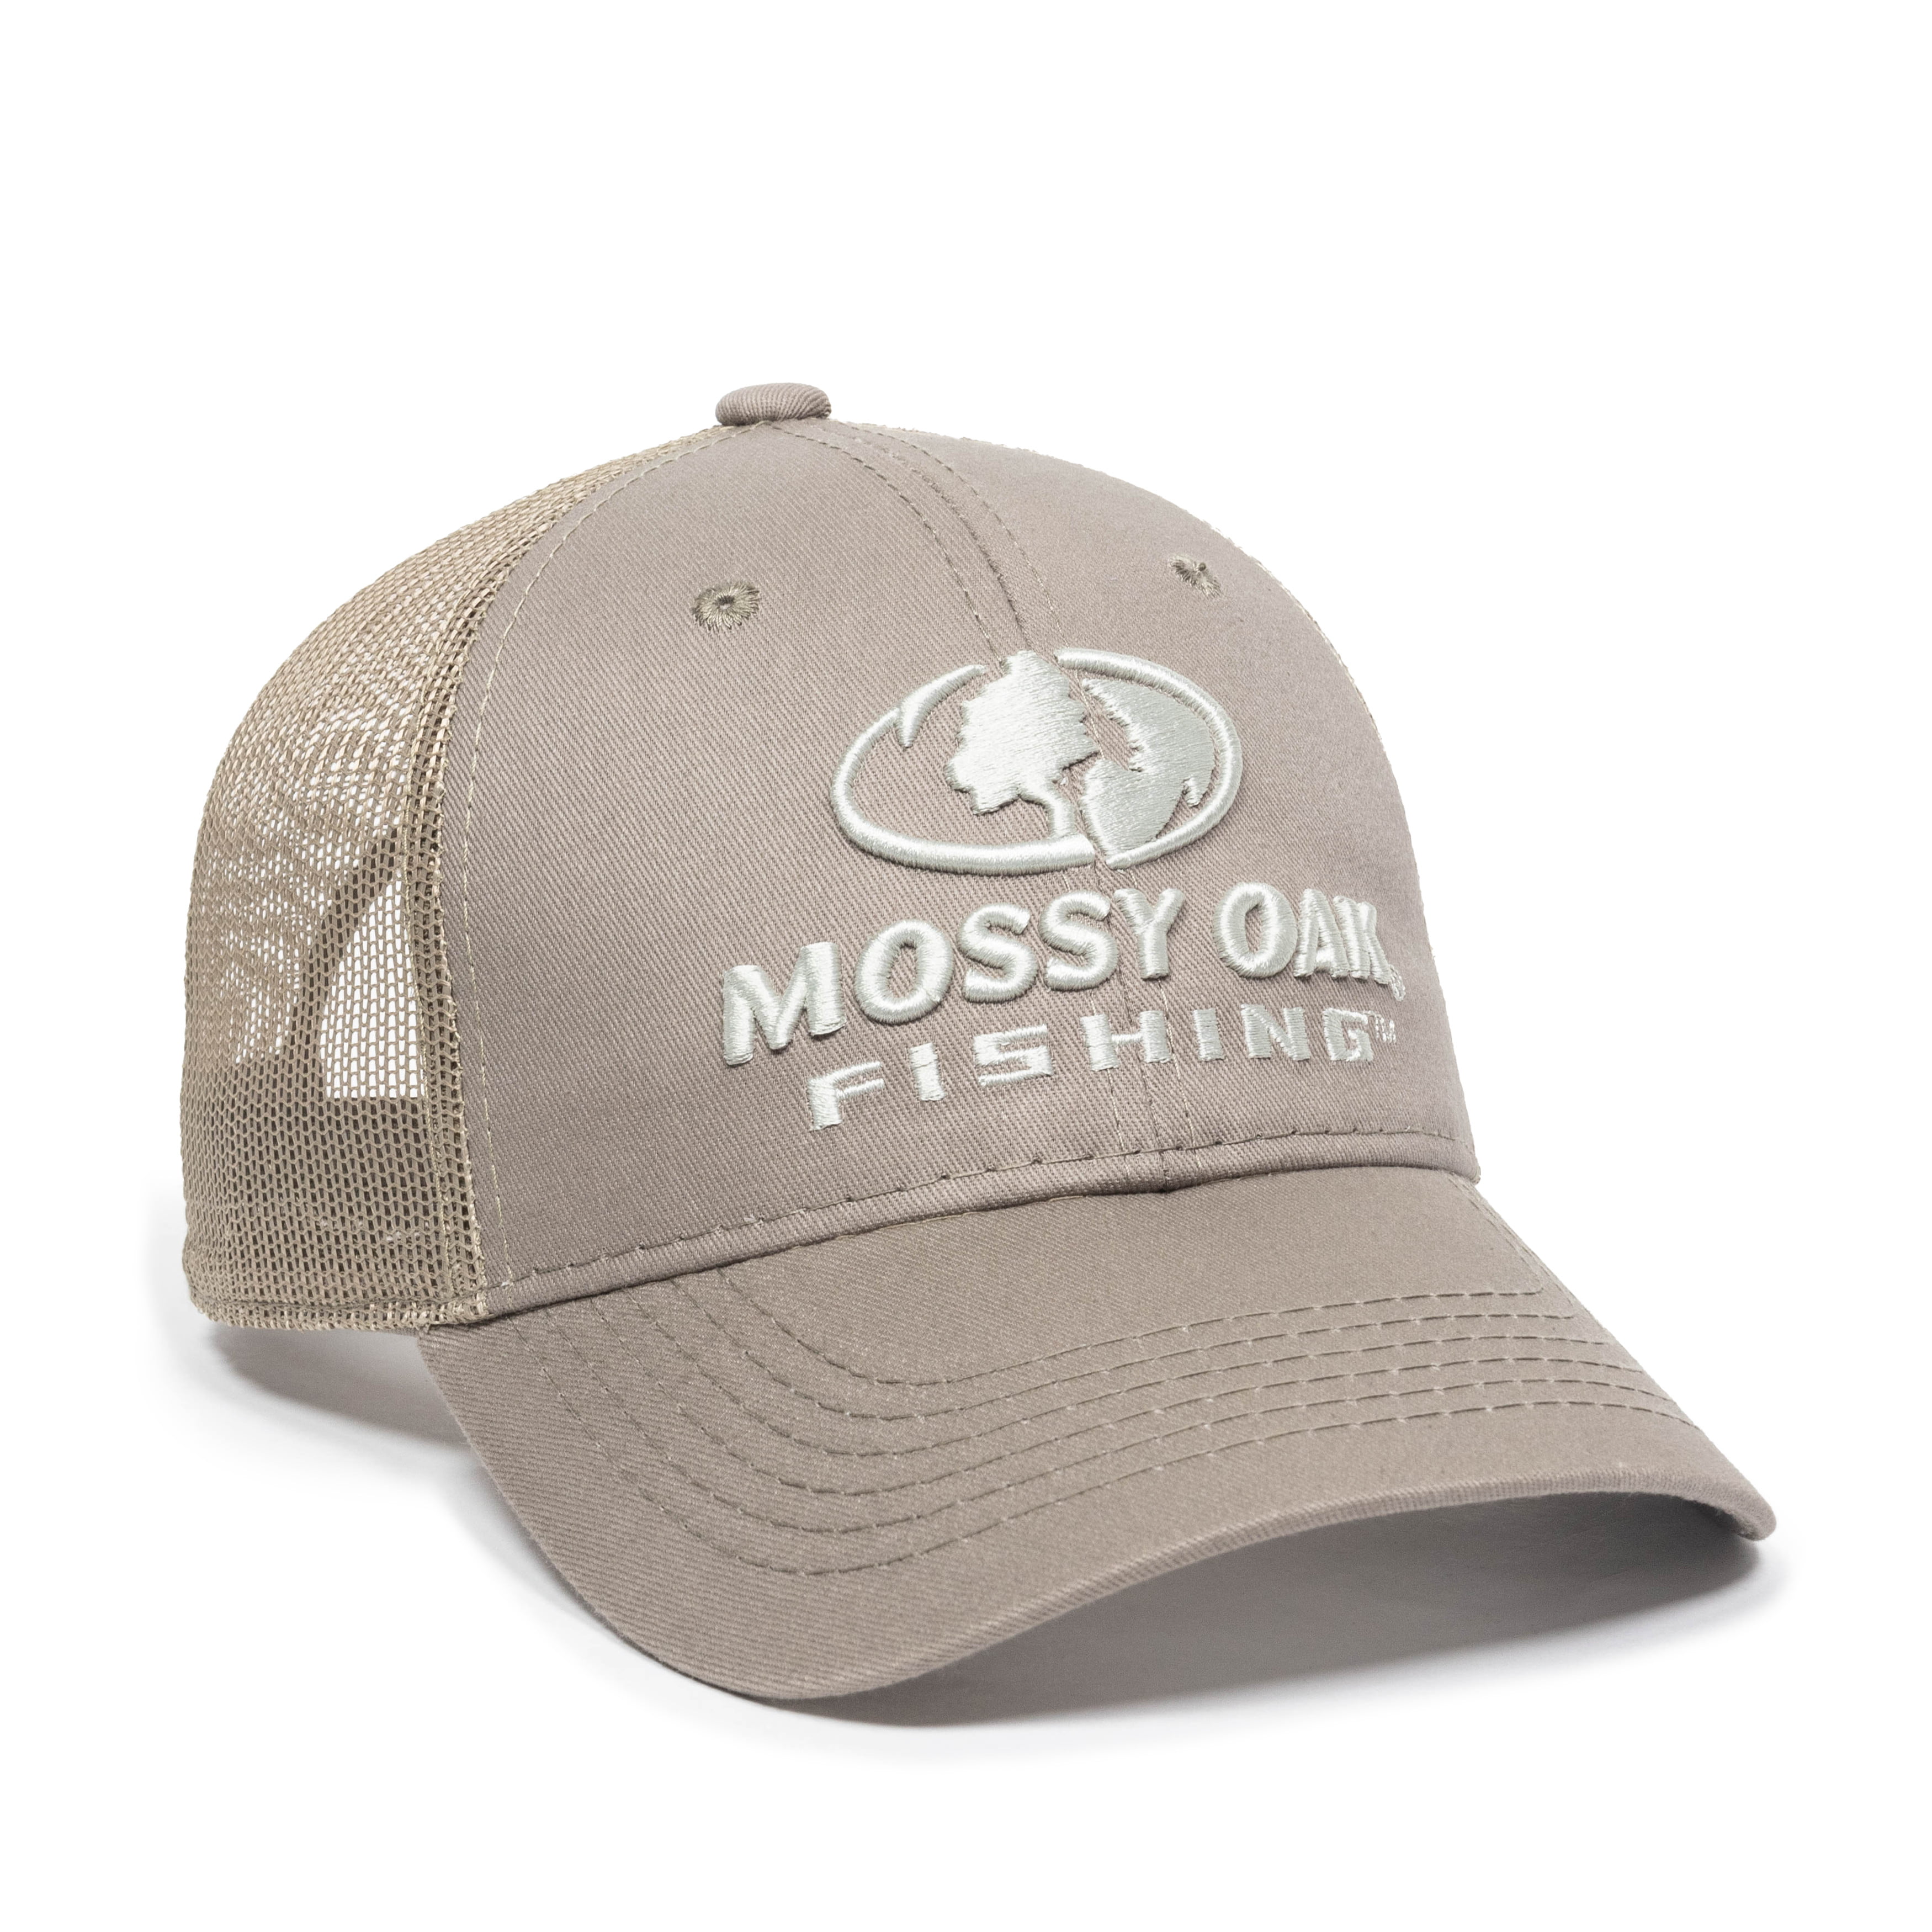 Mossy Oak Fishing Structured Baseball Style Hat, Khaki, Adult 